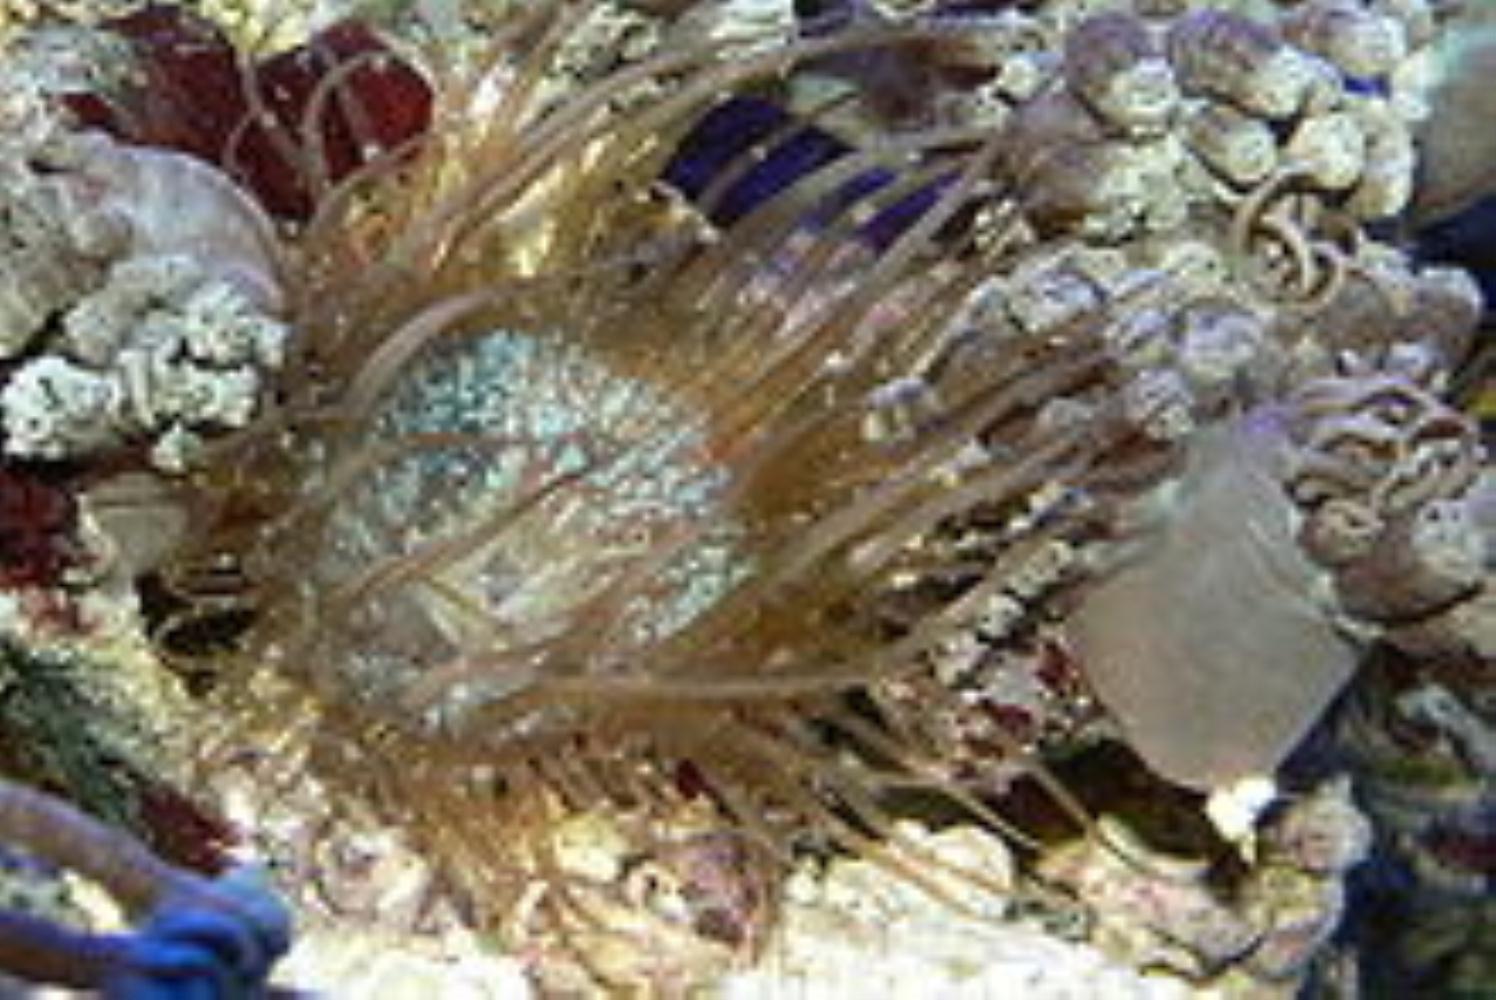 Trumpet anemone